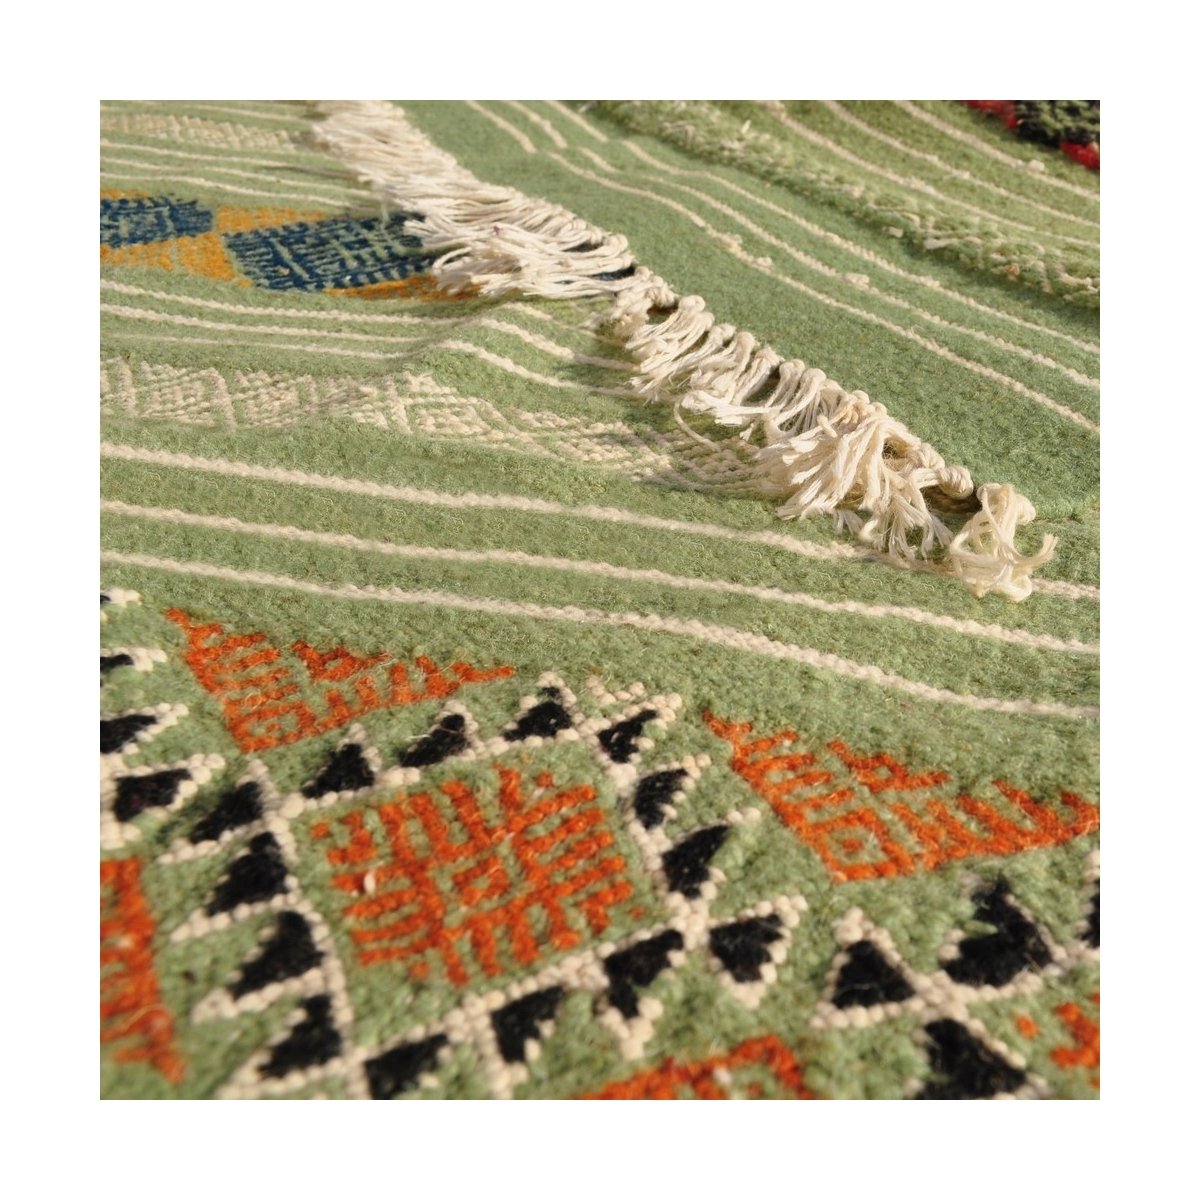 Berber tapijt Tapijt Kilim Gammarth 120x200 Groen (Handgeweven, Wol, Tunesië) Tunesisch kilimdeken, Marokkaanse stijl. Rechthoek